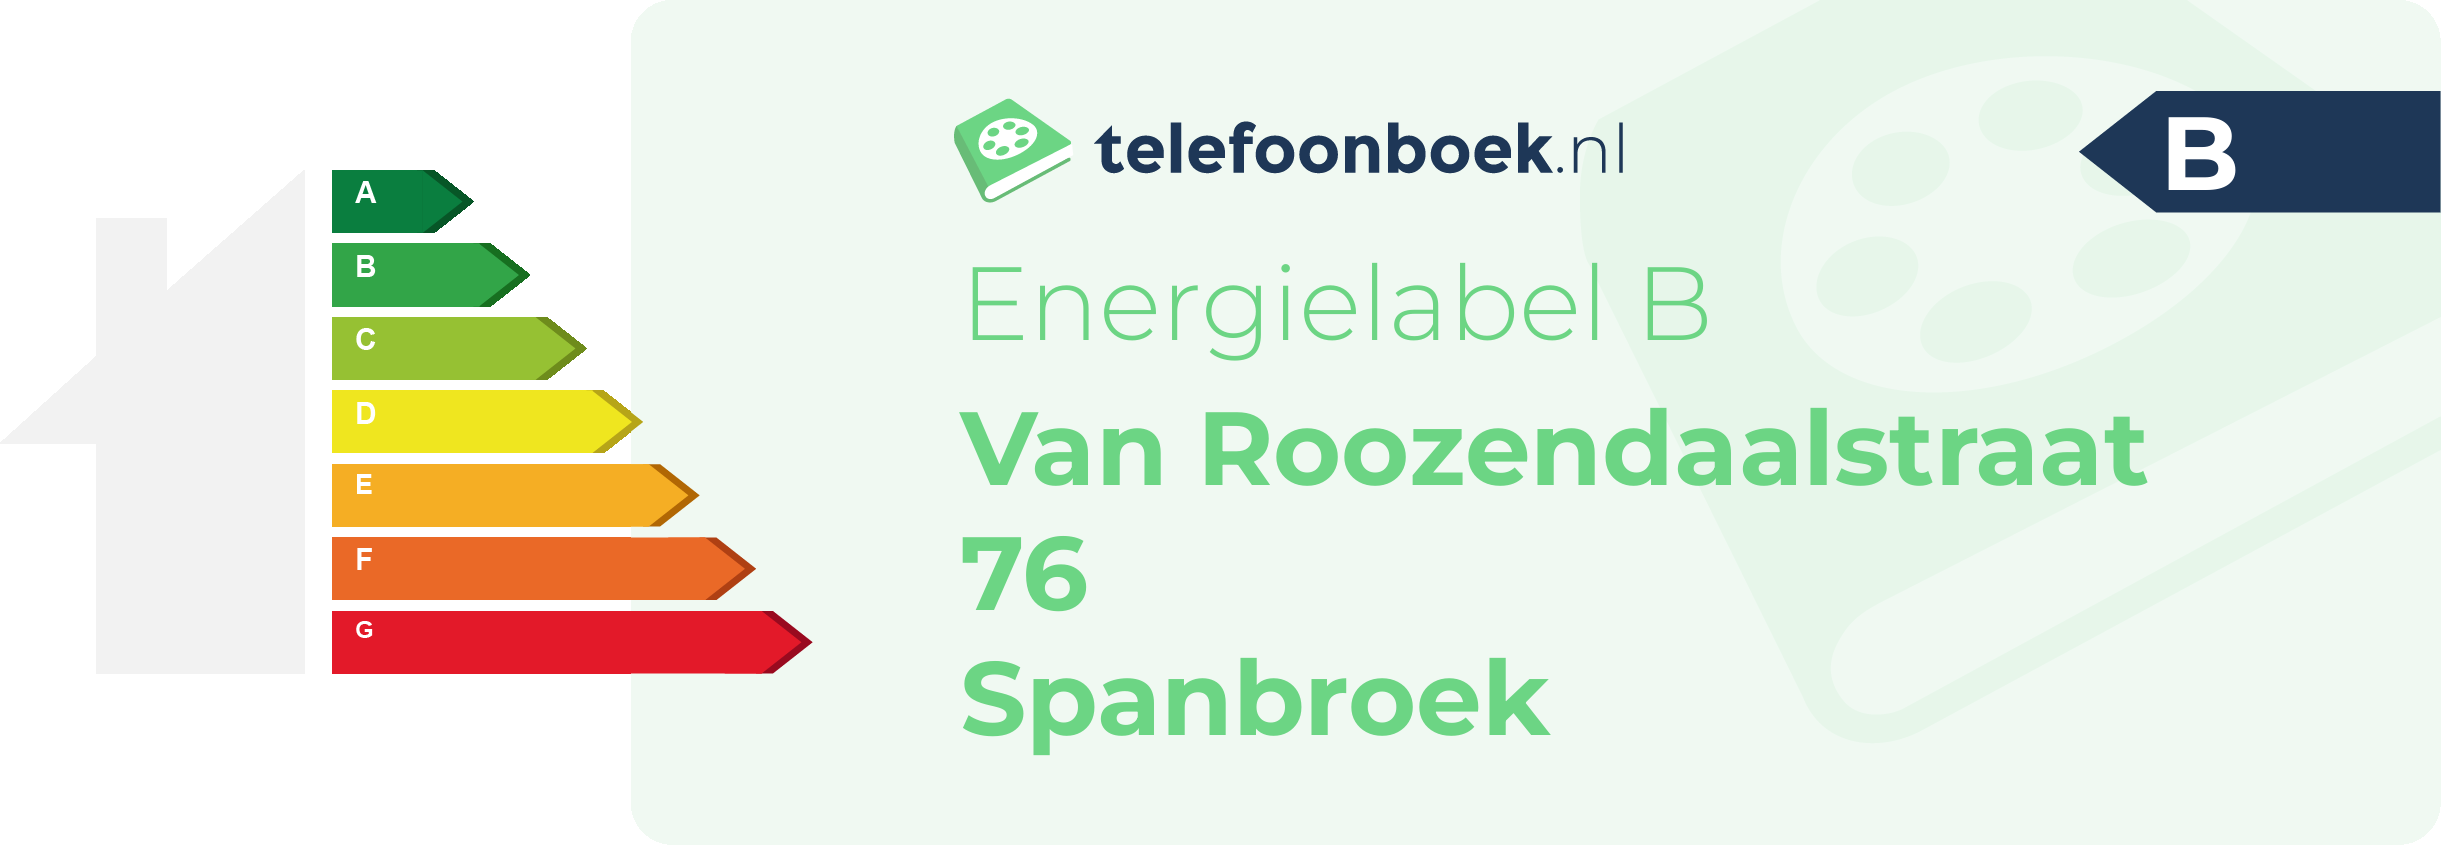 Energielabel Van Roozendaalstraat 76 Spanbroek